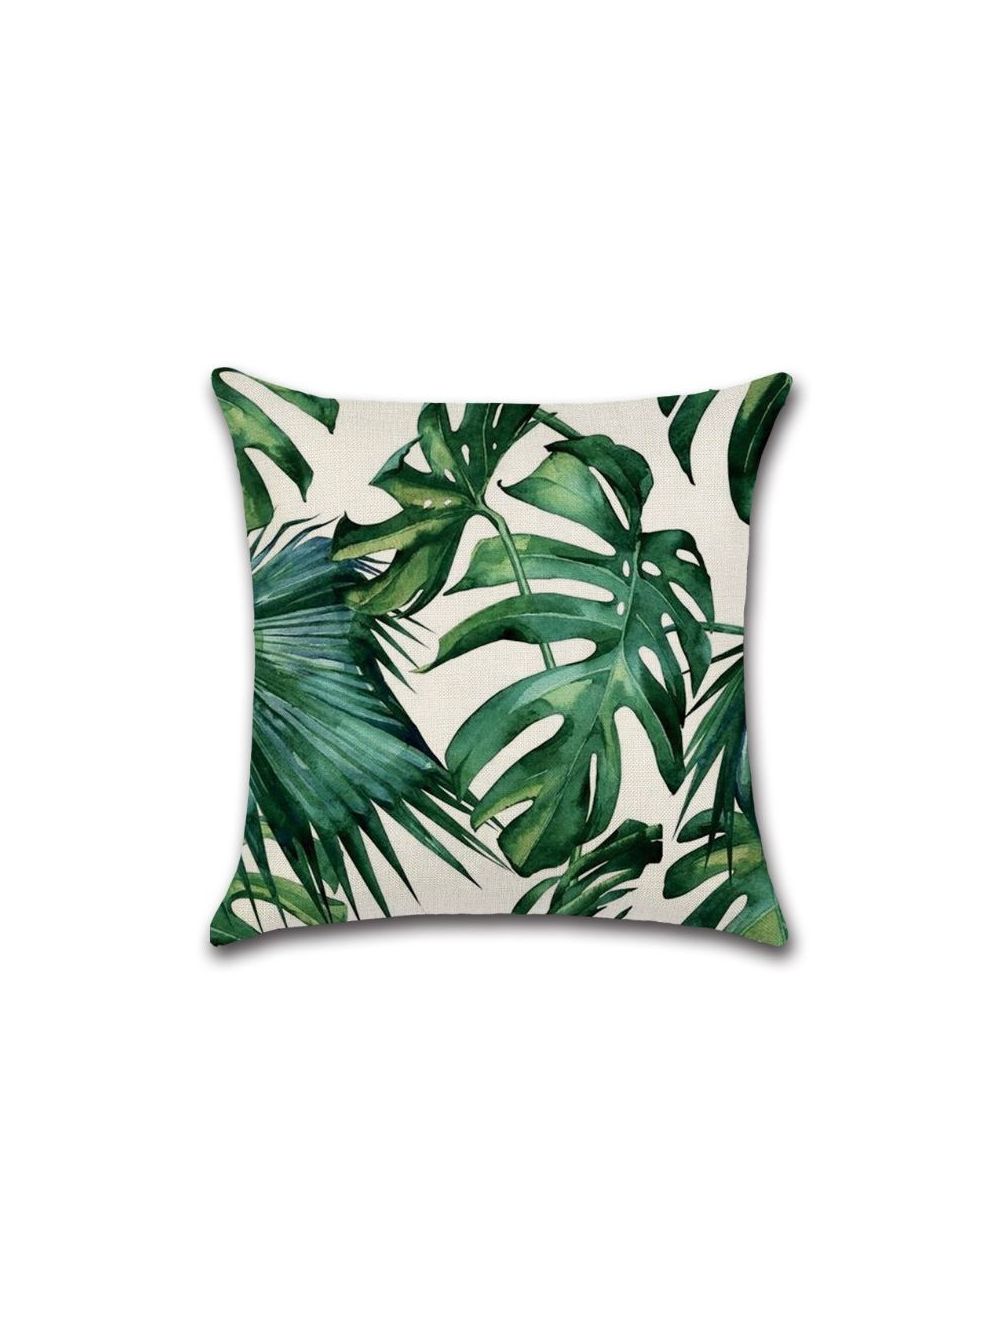 Rishahome Leaf Printed Cushion Cover 45x45 cm-9C27T0010